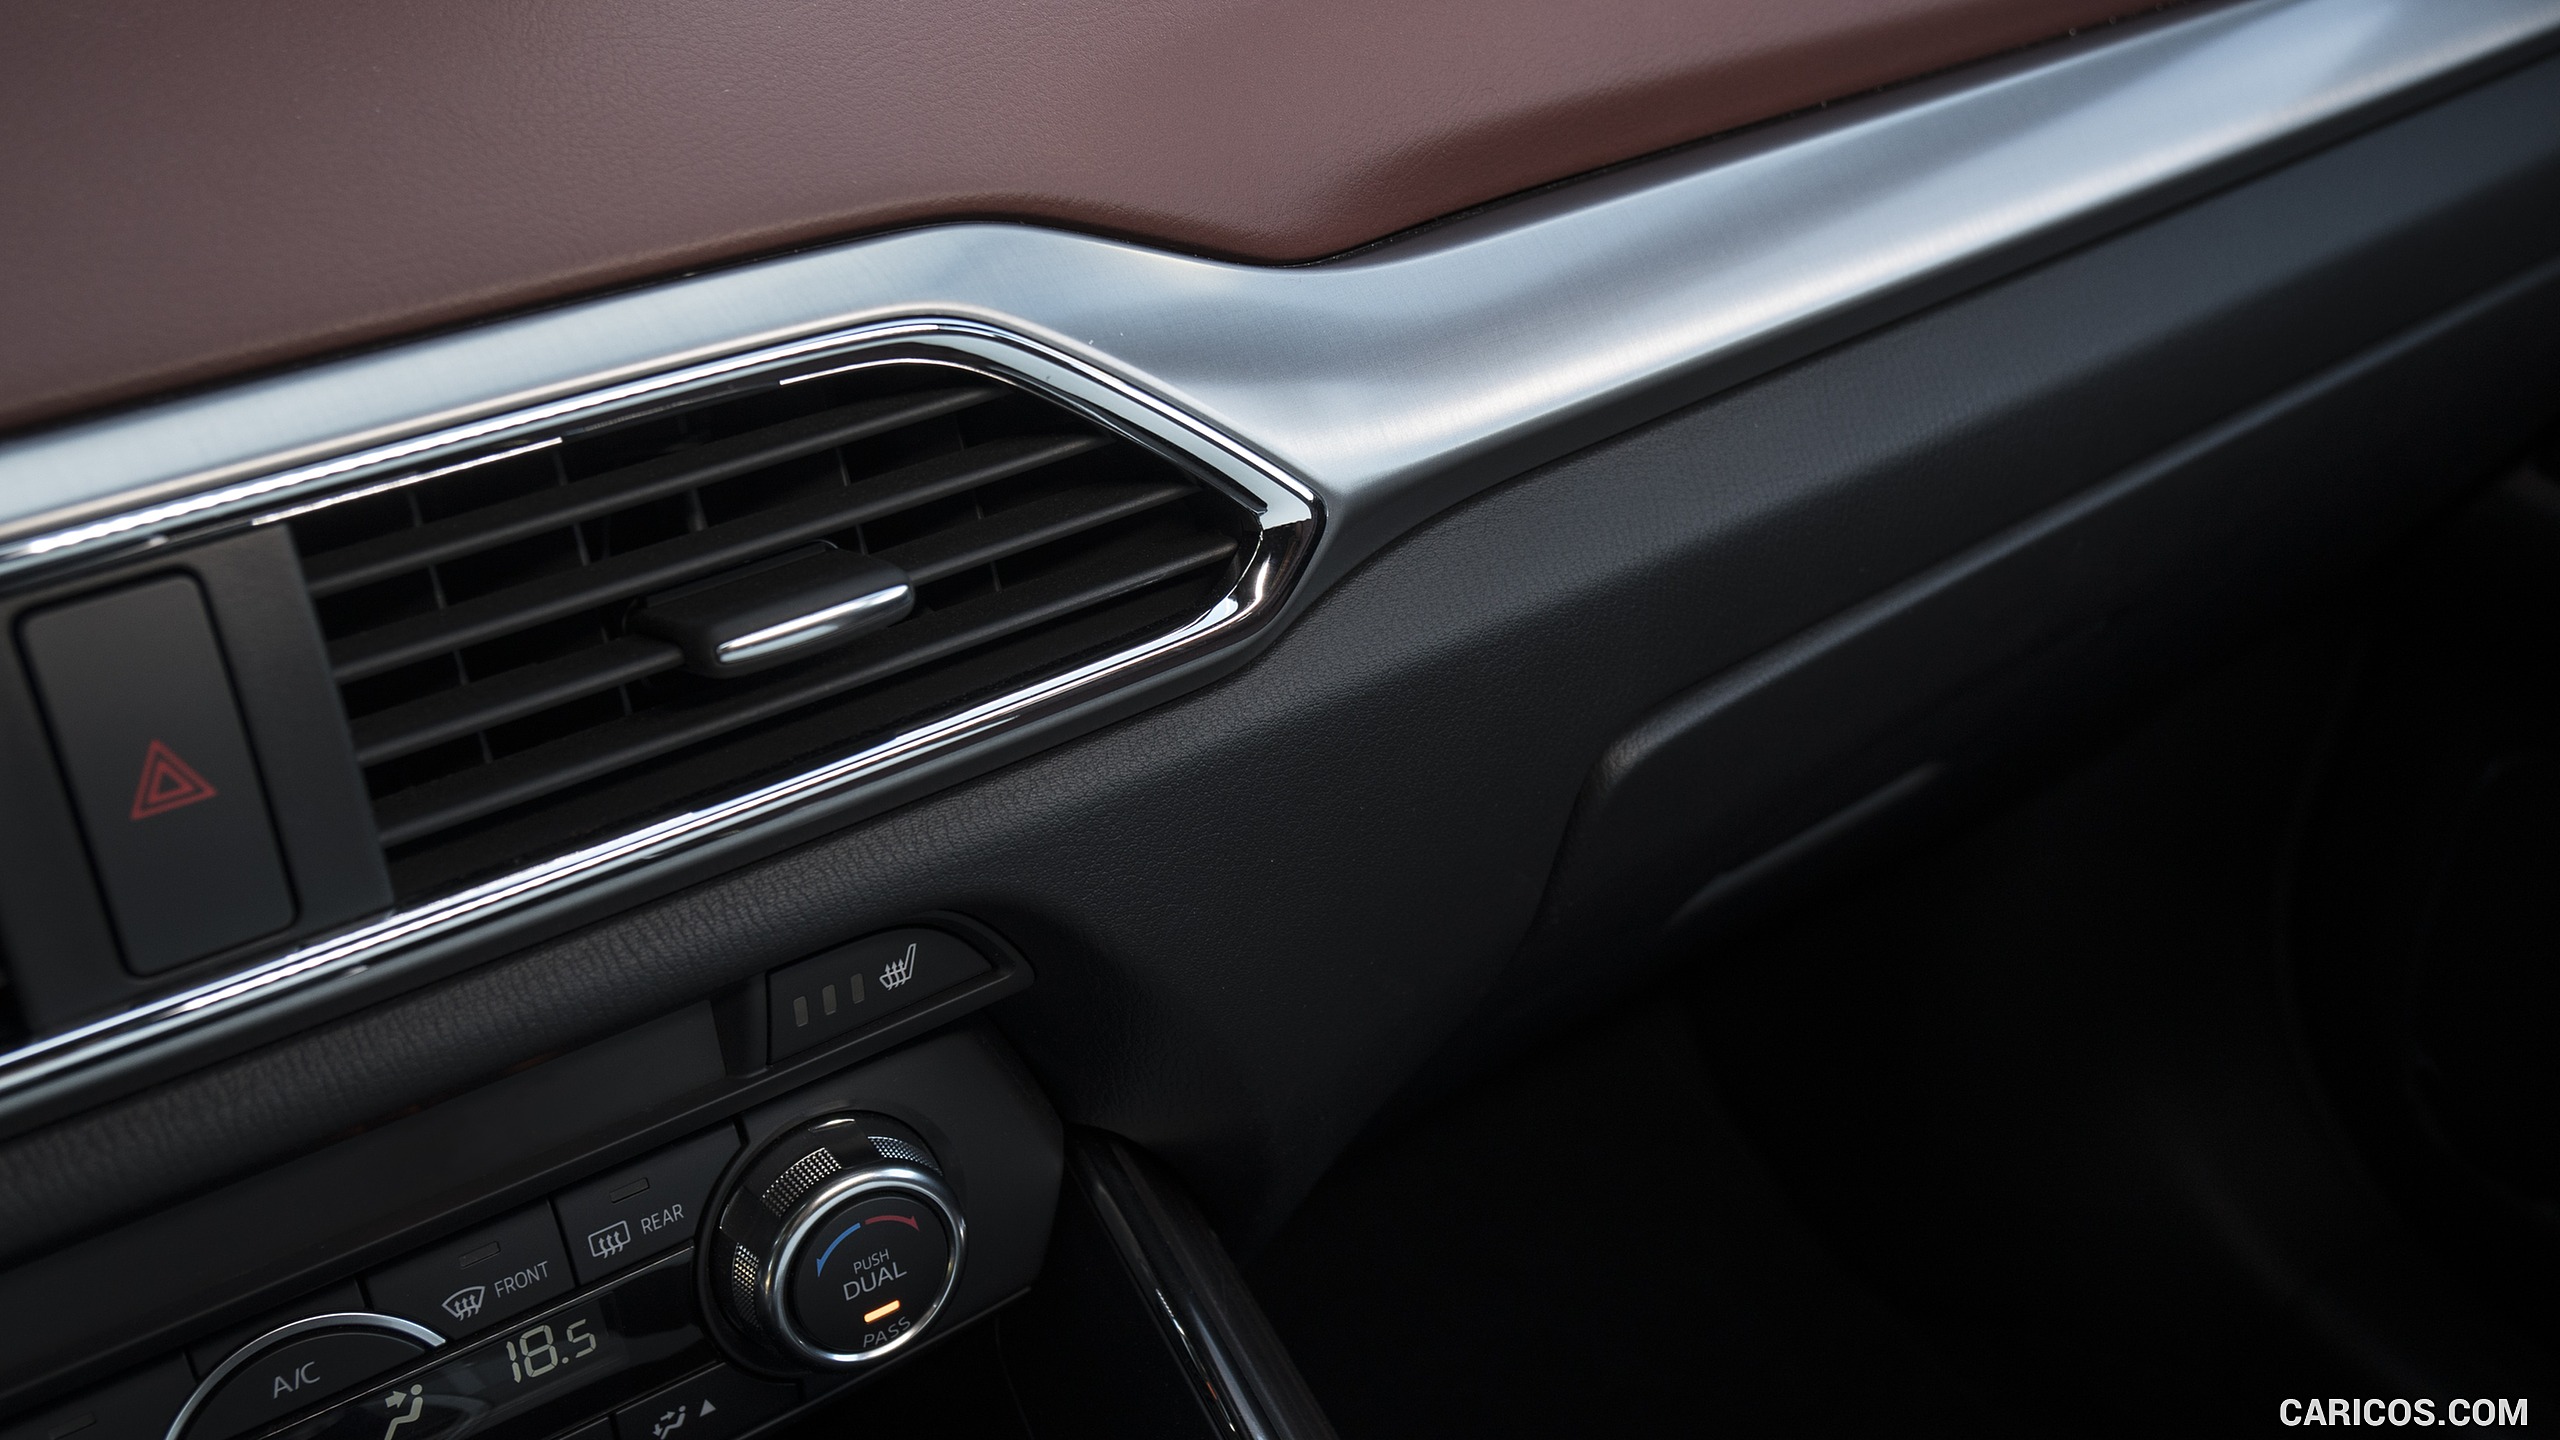 2016 Mazda CX-9 - Interior, Air Vent, #20 of 69